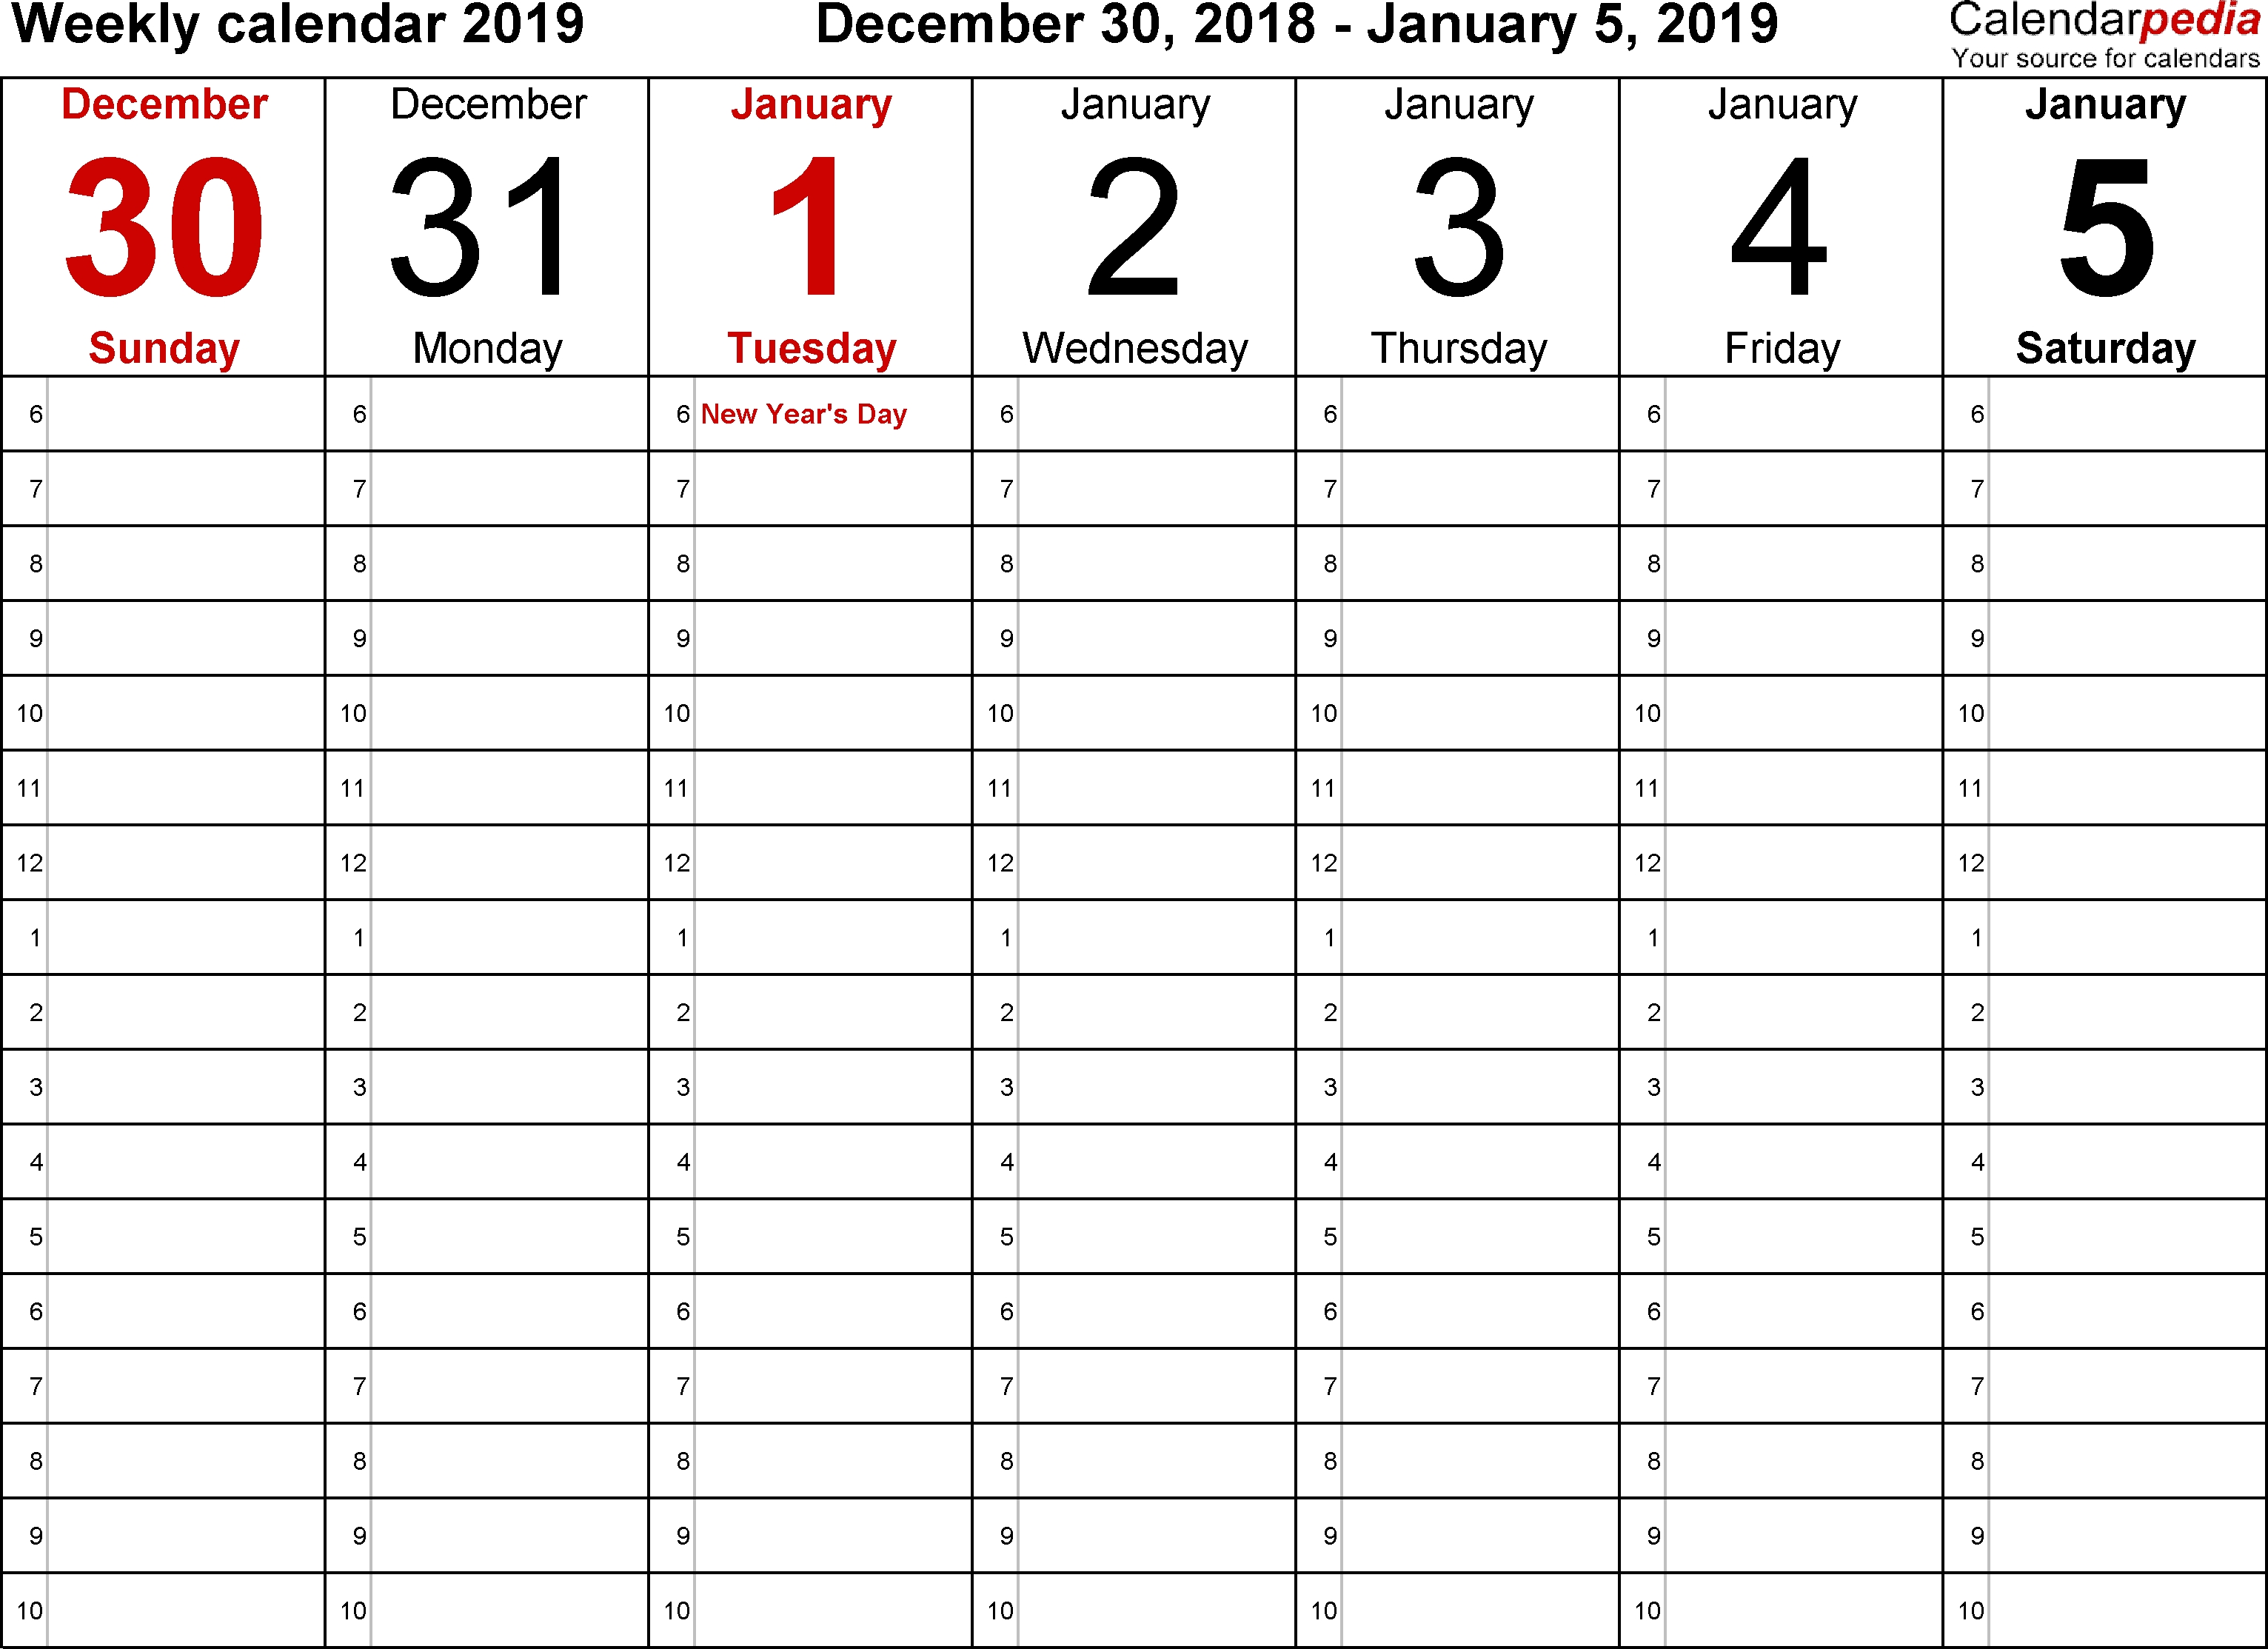 Weekly Calendar 2019 For Word - 12 Free Printable Templates pertaining to Free Printable Blank Weekly Calendars